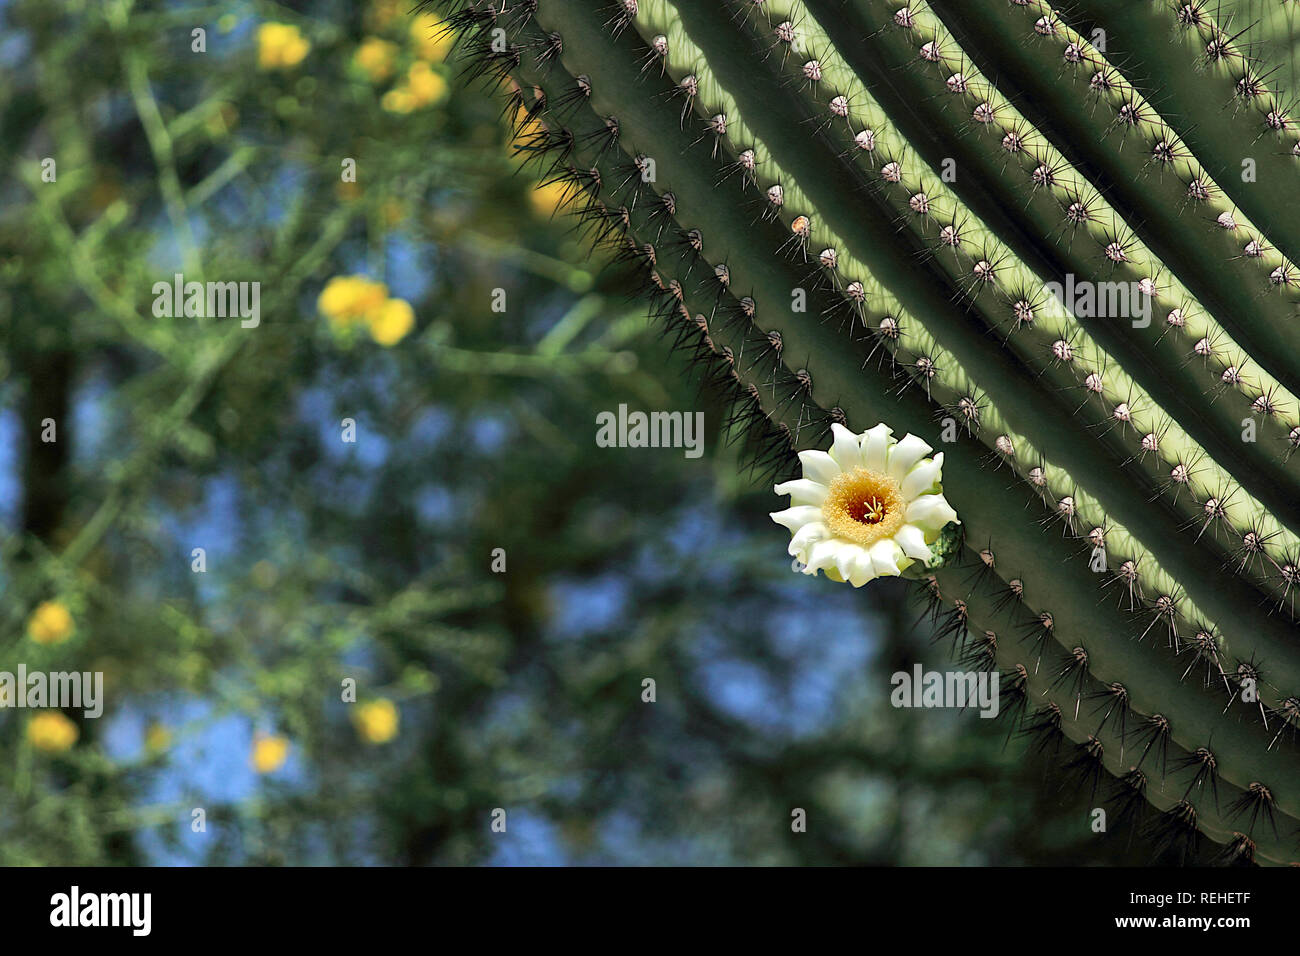 saguaro cactus arm with white flower blossom Stock Photo